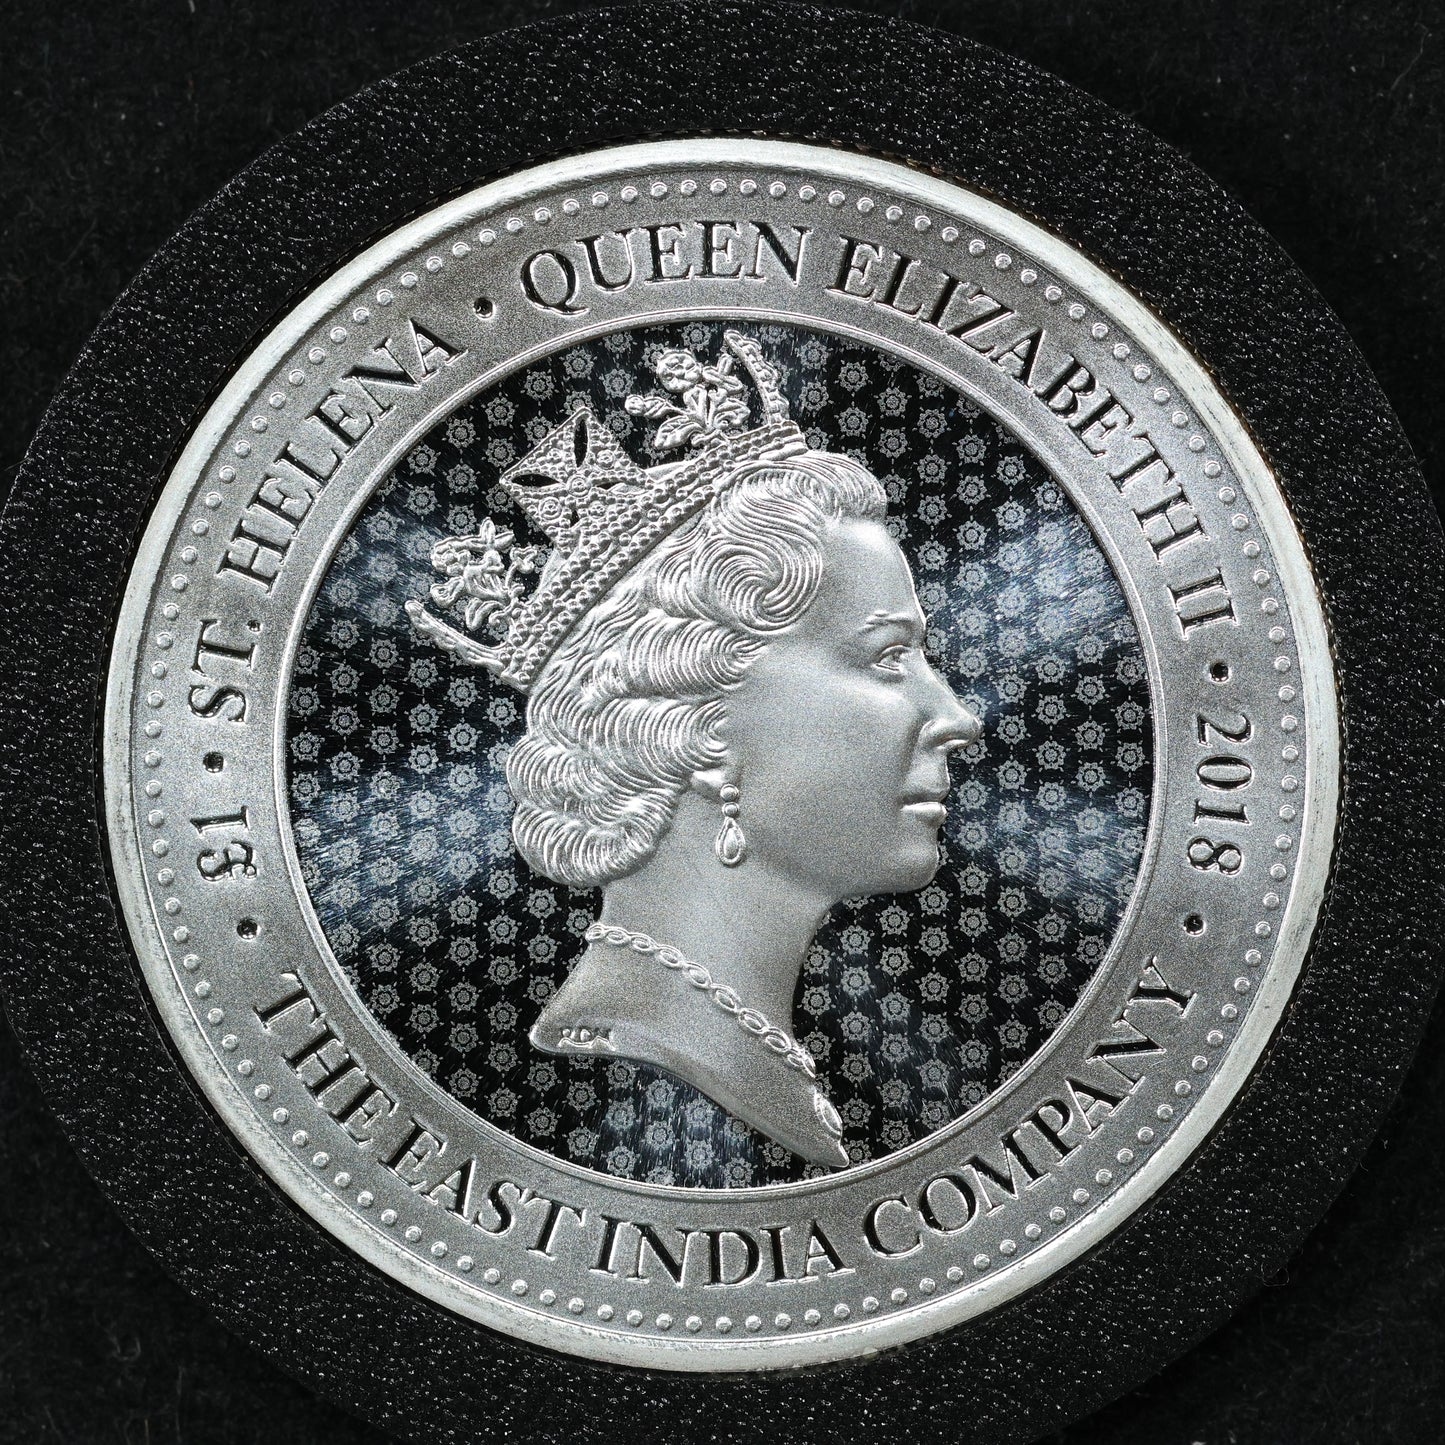 2018 Guinea St. Helena 1 oz .999 Fine Silver East India Company Coin w/ Capsule